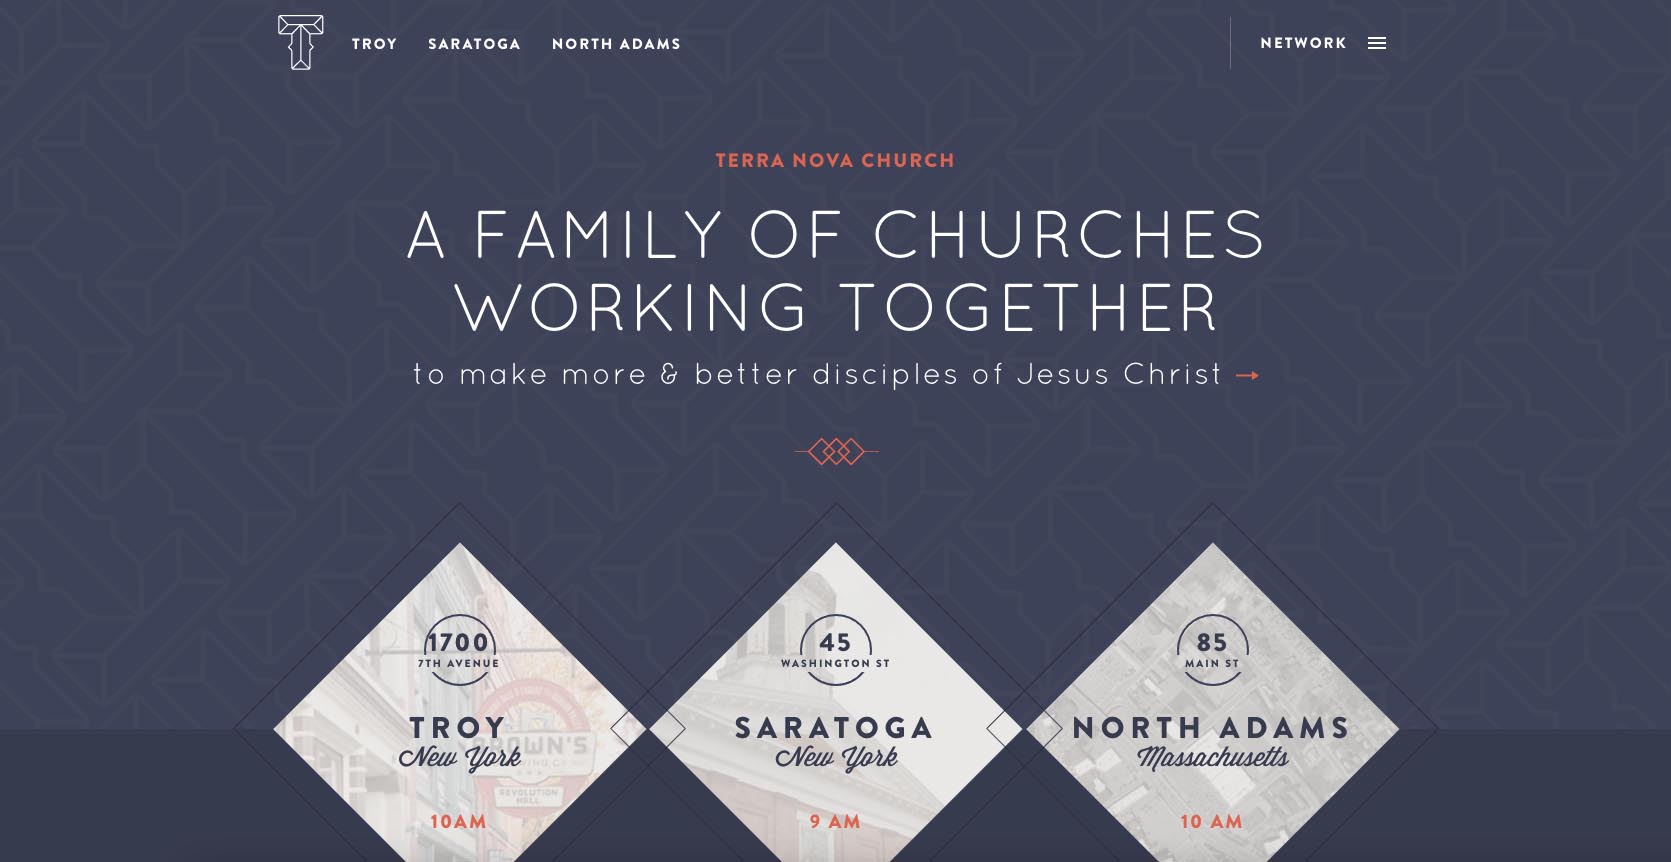 Terranova church homepage